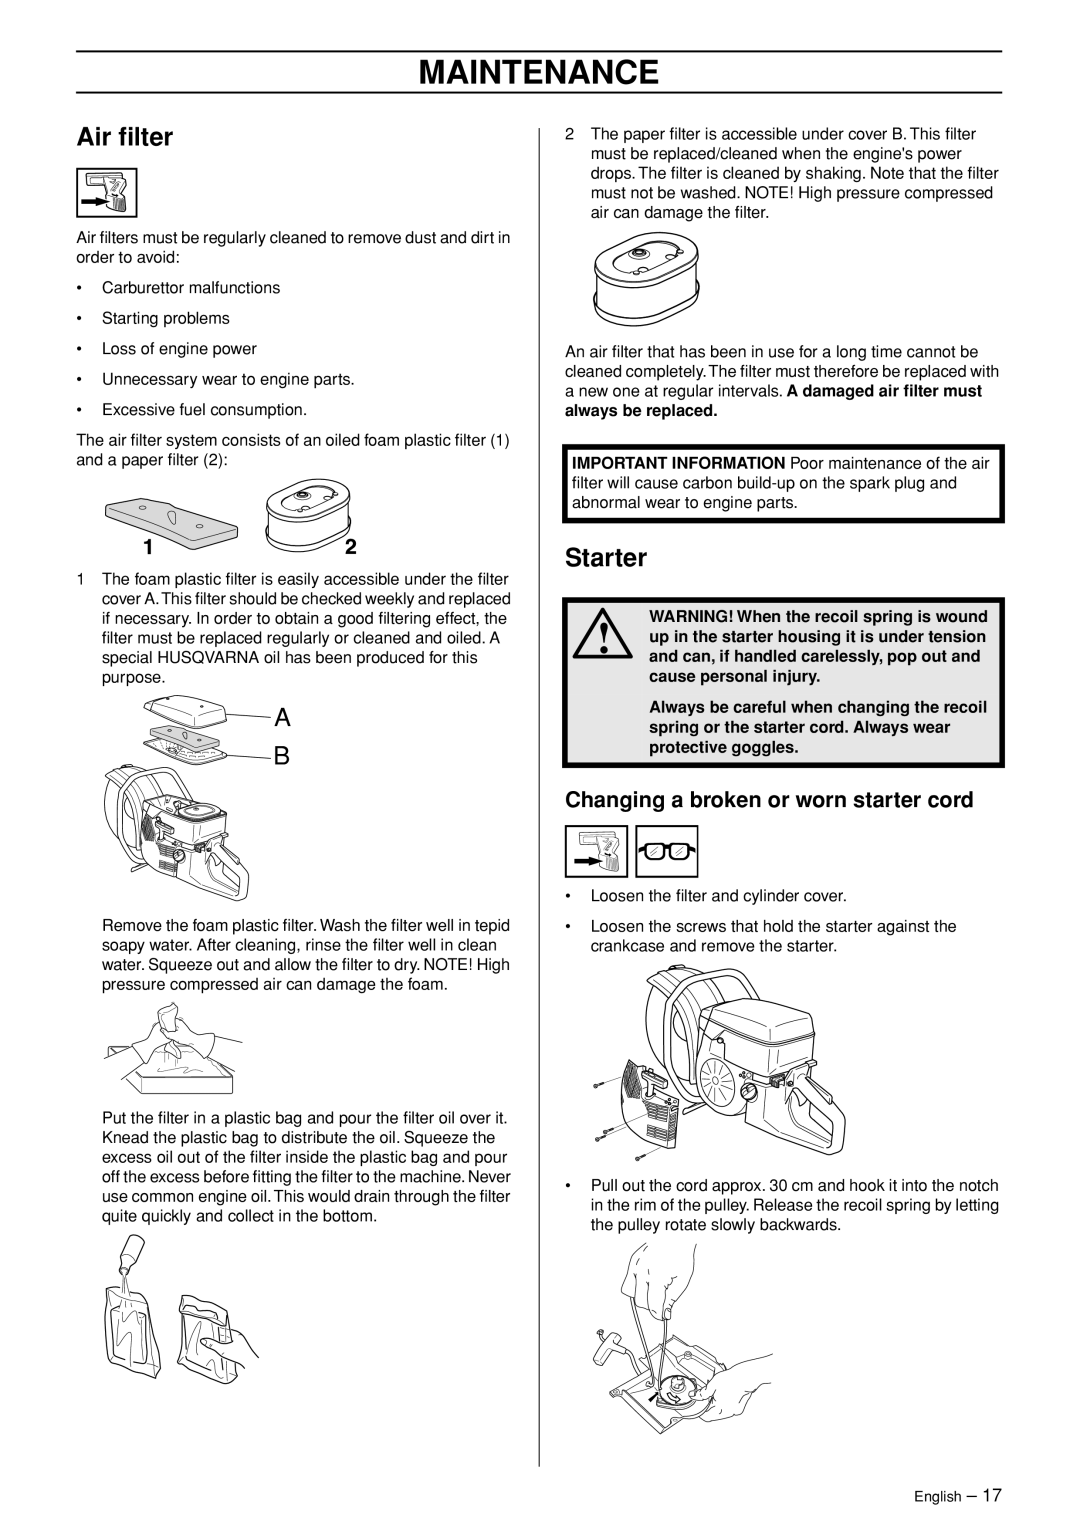 Husqvarna K960 manual Air ﬁlter, Starter, Changing a broken or worn starter cord, Maintenance 